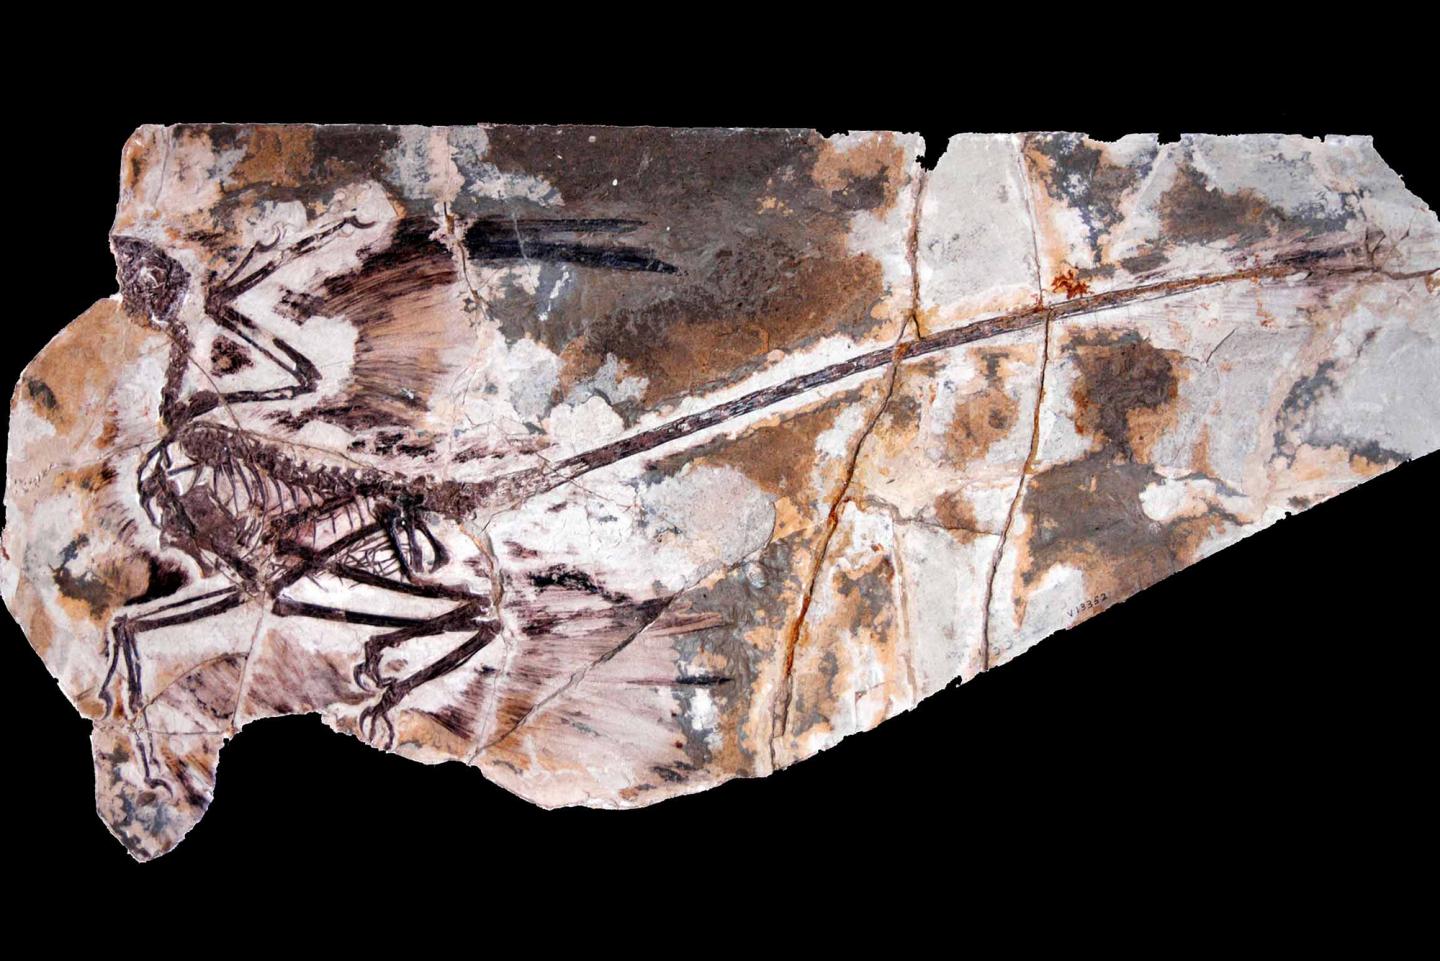 Fossil IVPP V13352 of Microraptor gui (Dinosauria, Dromeosauridae)